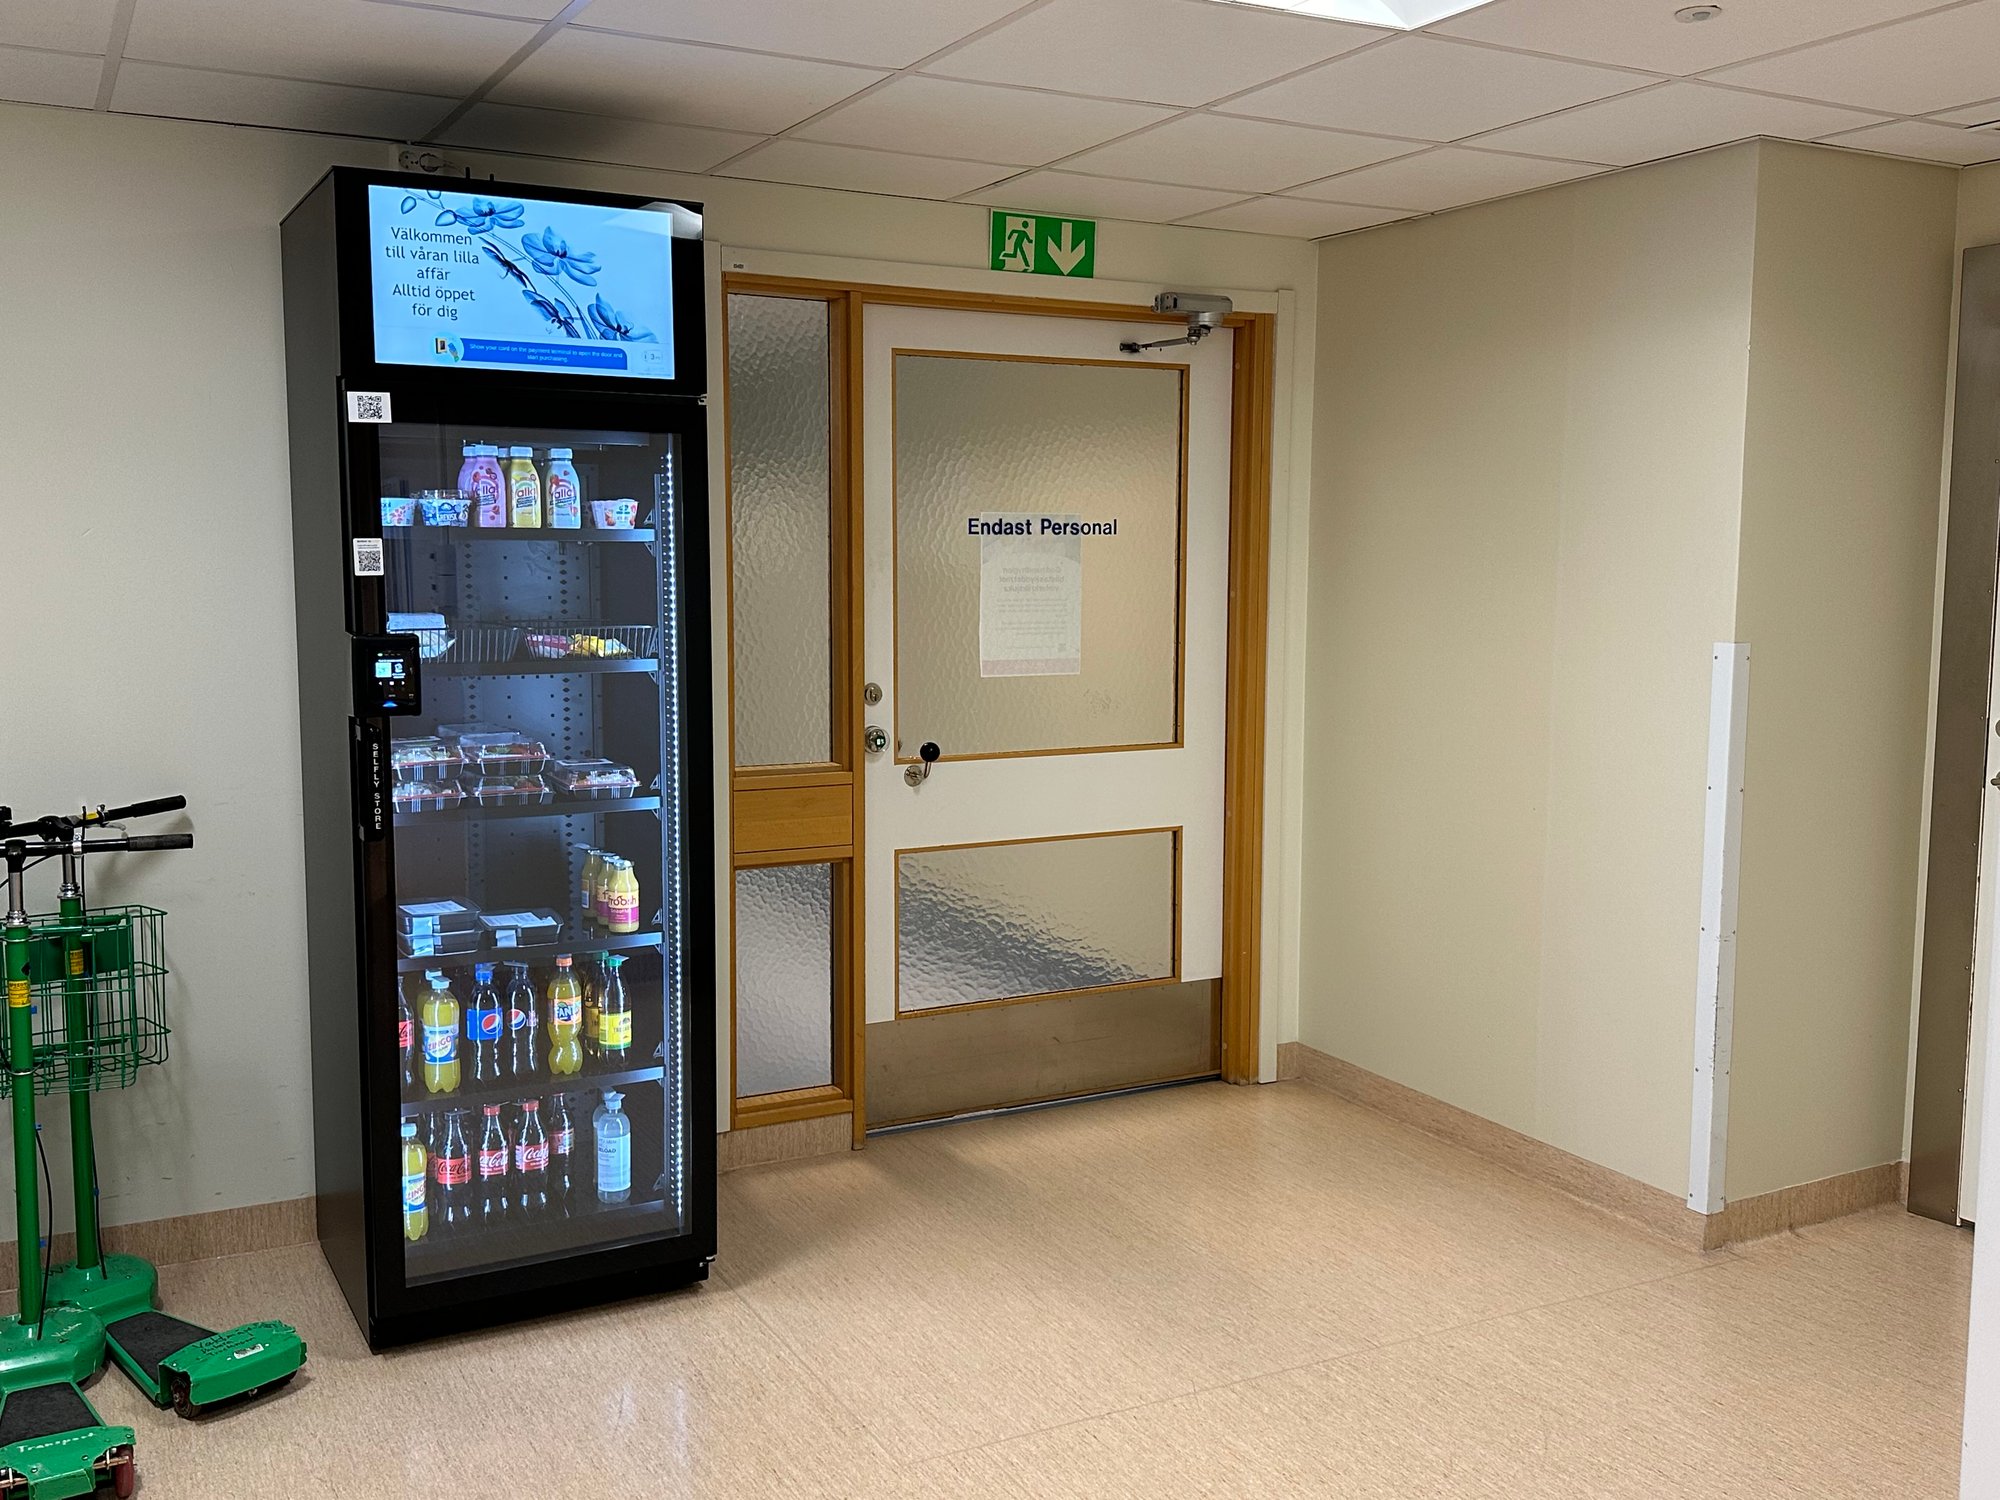 Hospital wit a smart vending machine